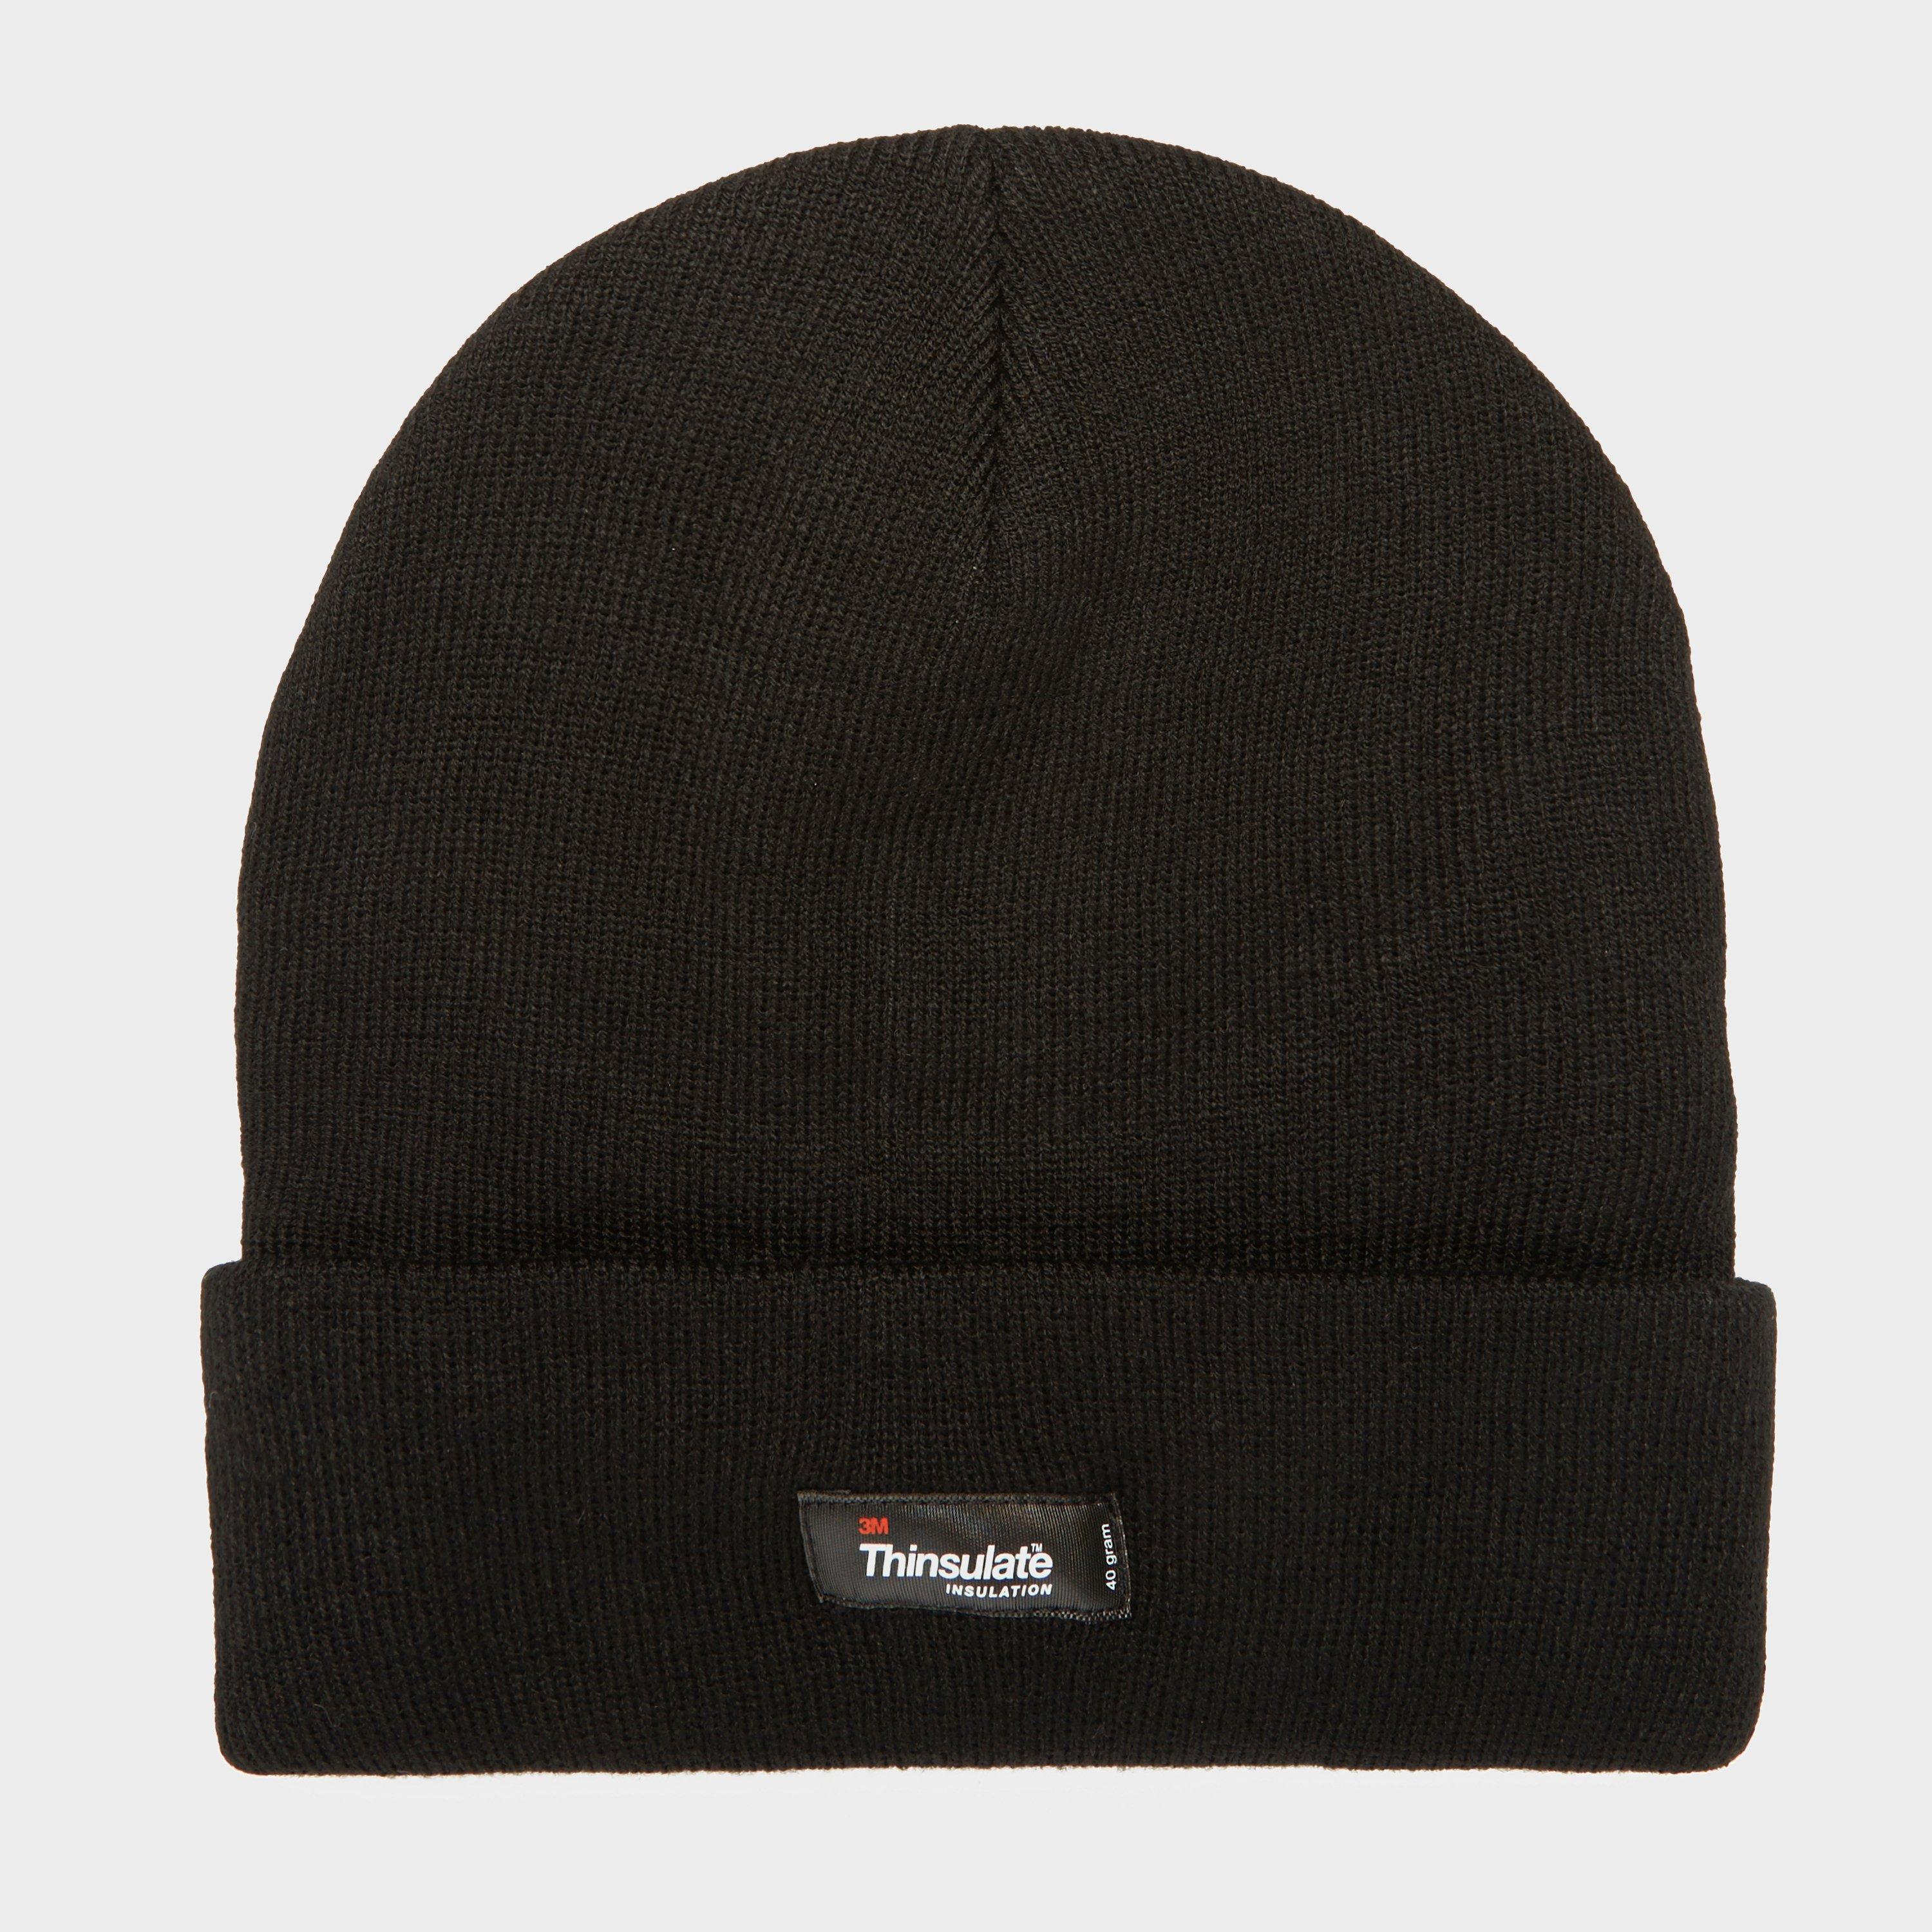 Peter Storm Unisex Thinsulate Beanie Hat  Black